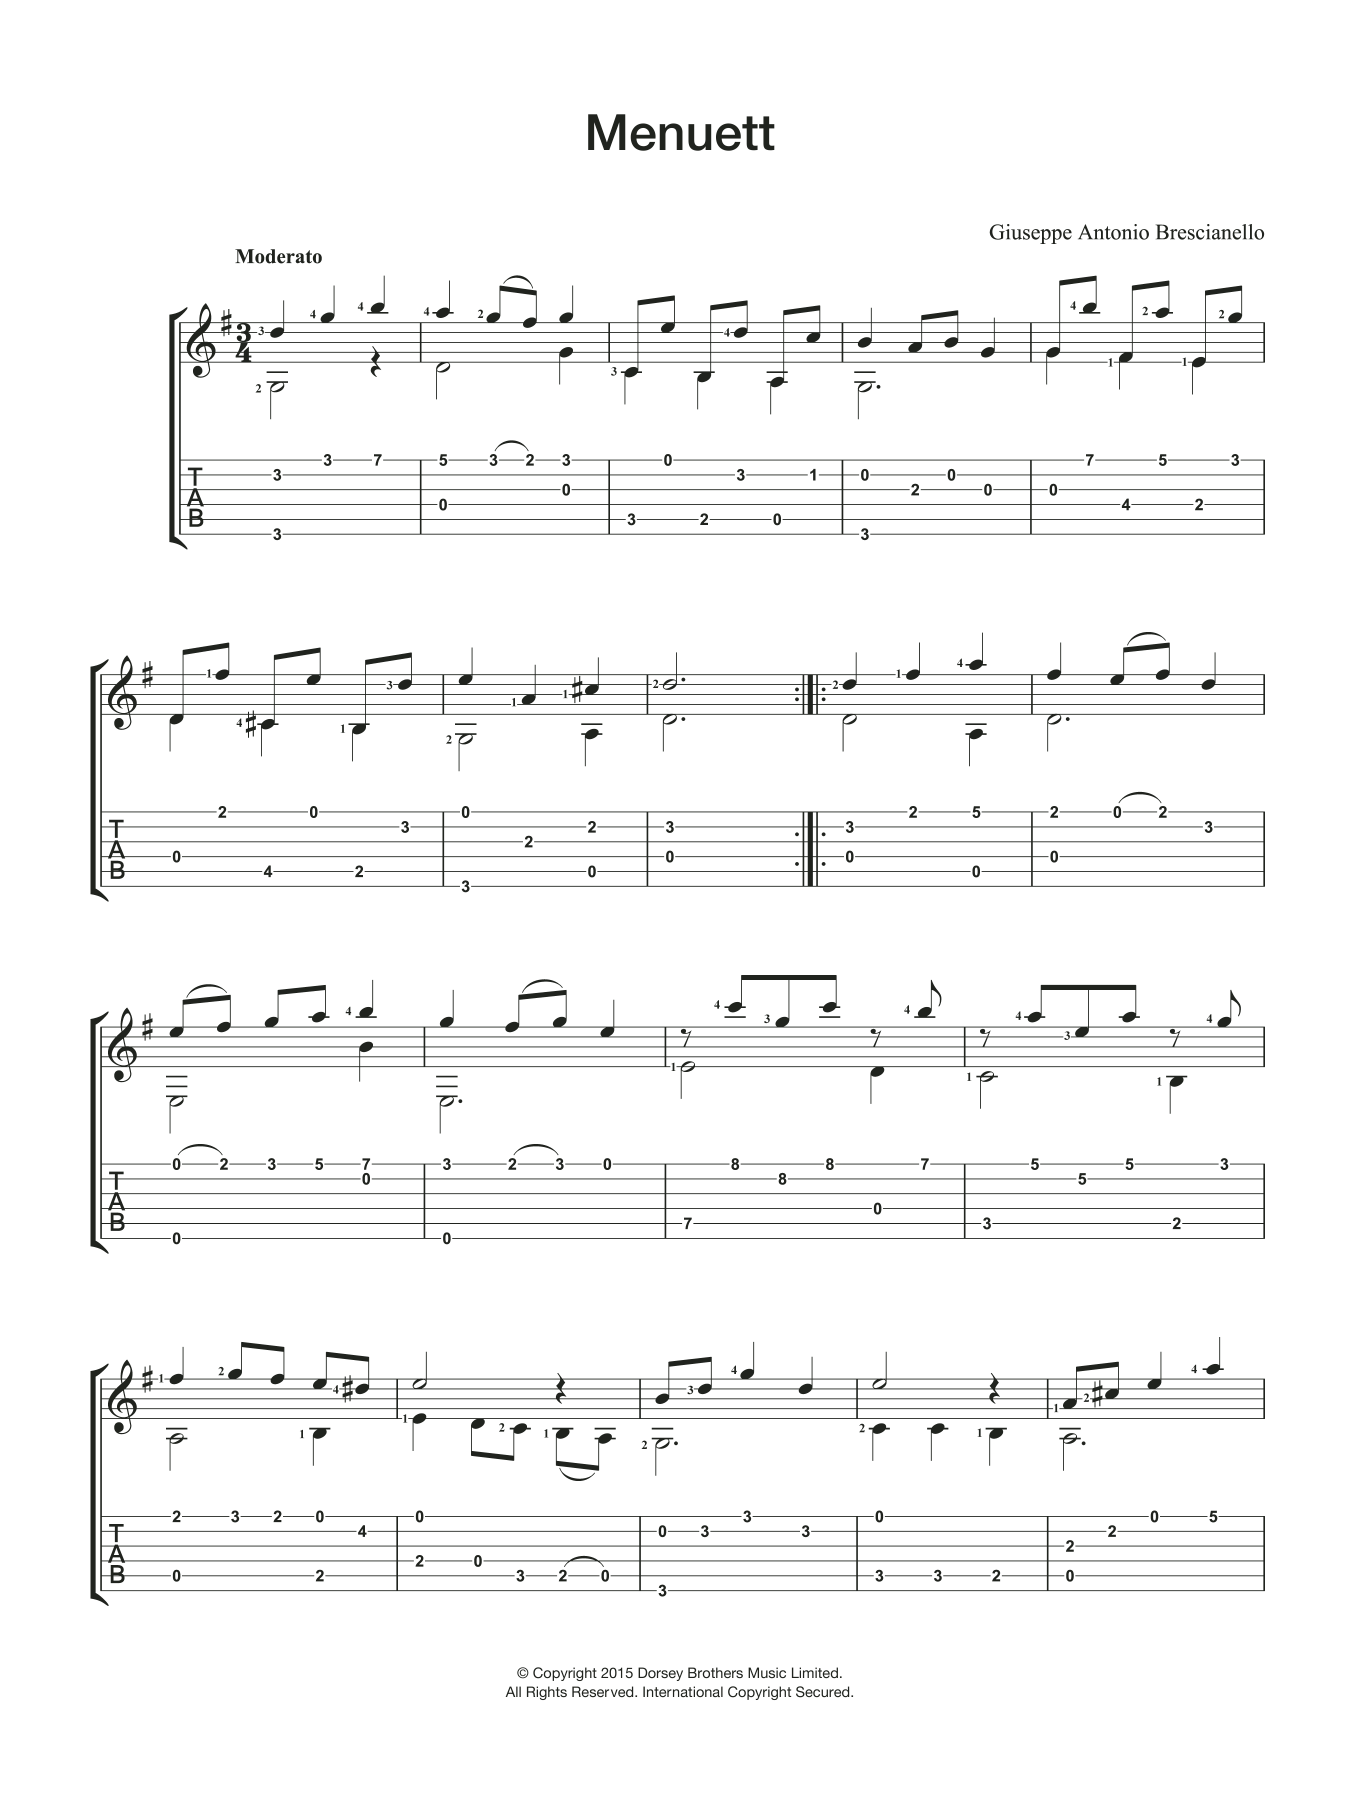 Download Giuseppe Antonio Brescianello Menuett Sheet Music and learn how to play Guitar PDF digital score in minutes